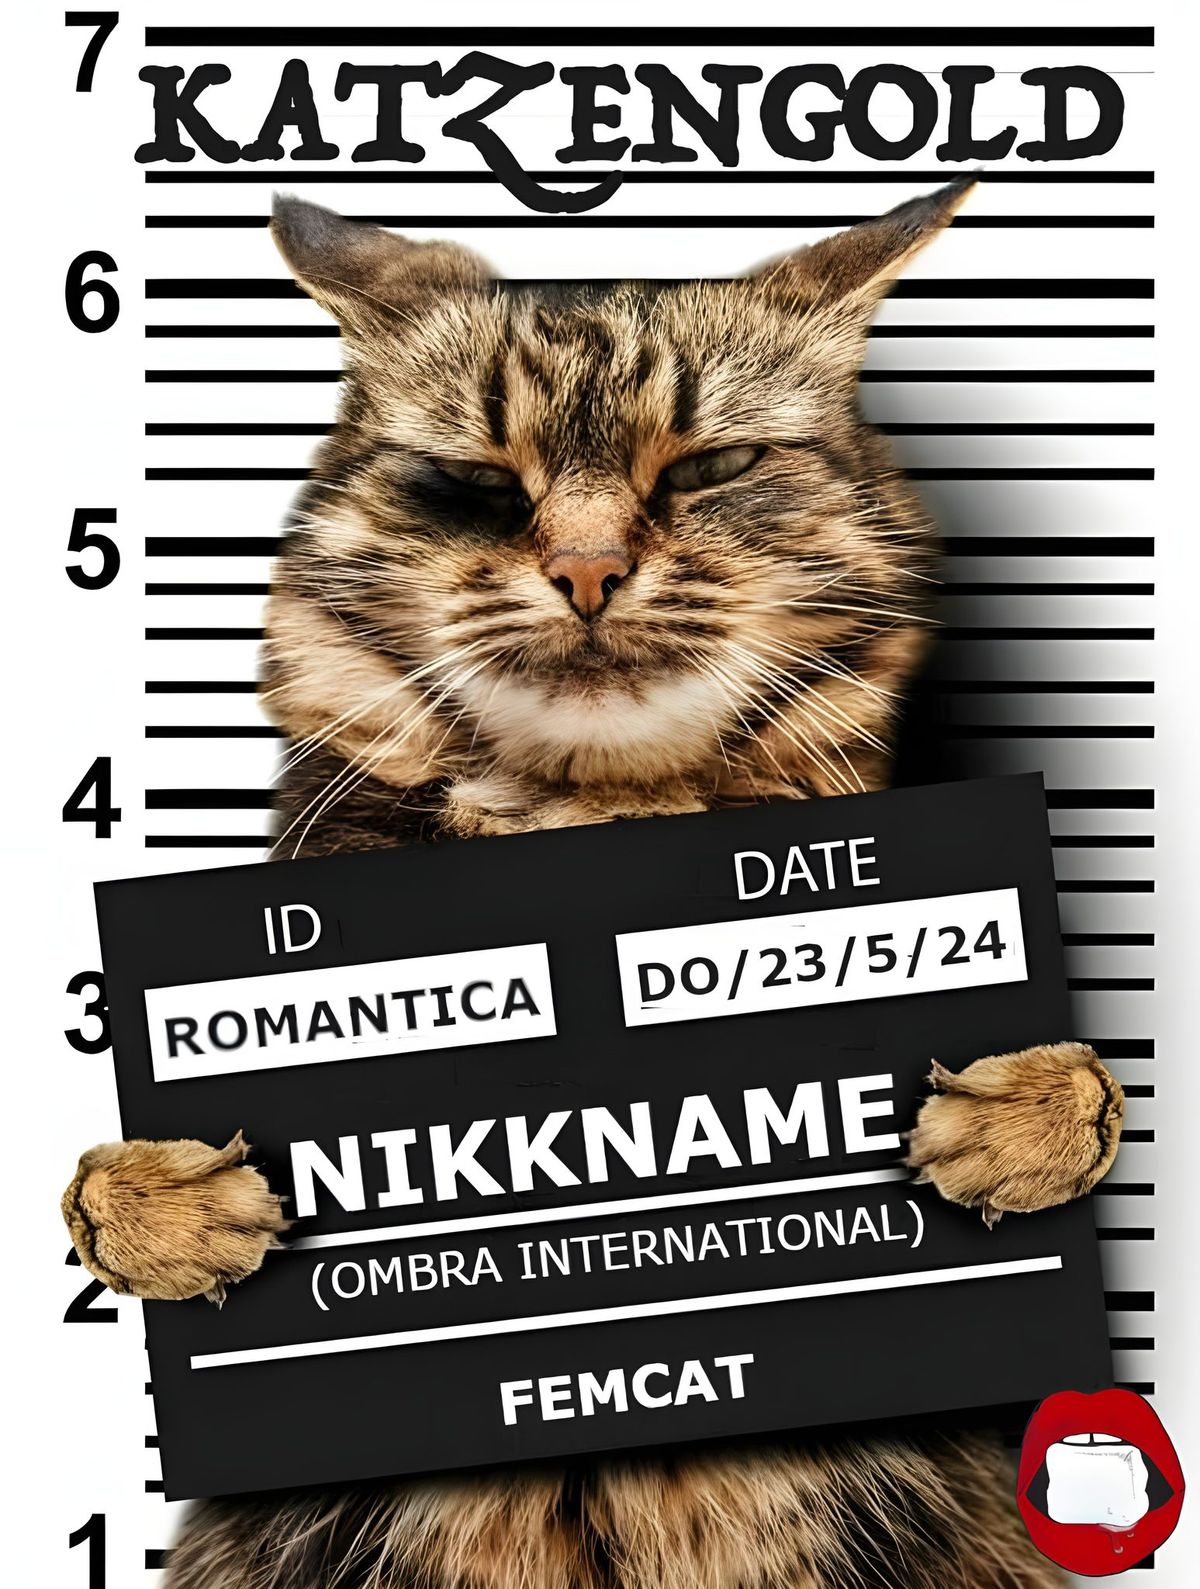 KATZENGOLD am DONNERSTAG miaut mit NIKKNAME (Ombra International) & Femcat